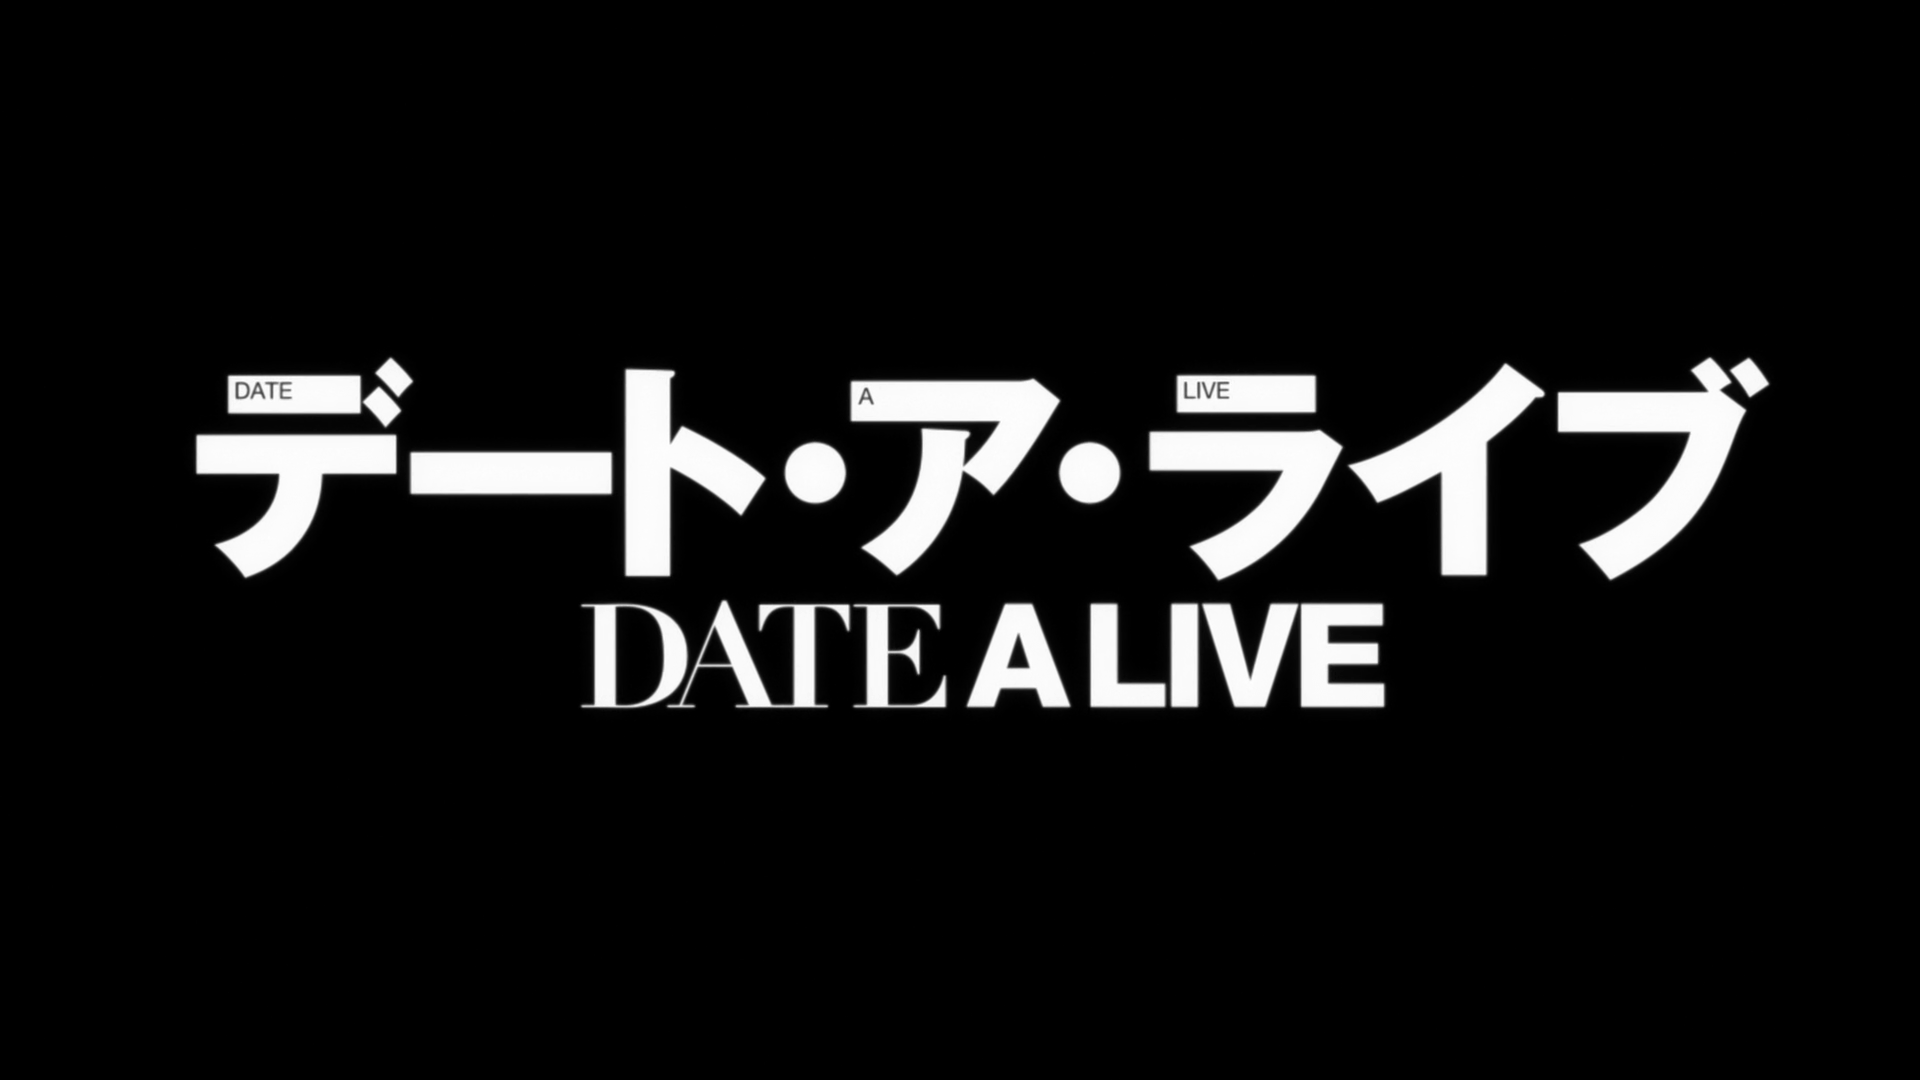 A life ru w82ur. Date a Live logo. Date a Live надпись. The Date лого.